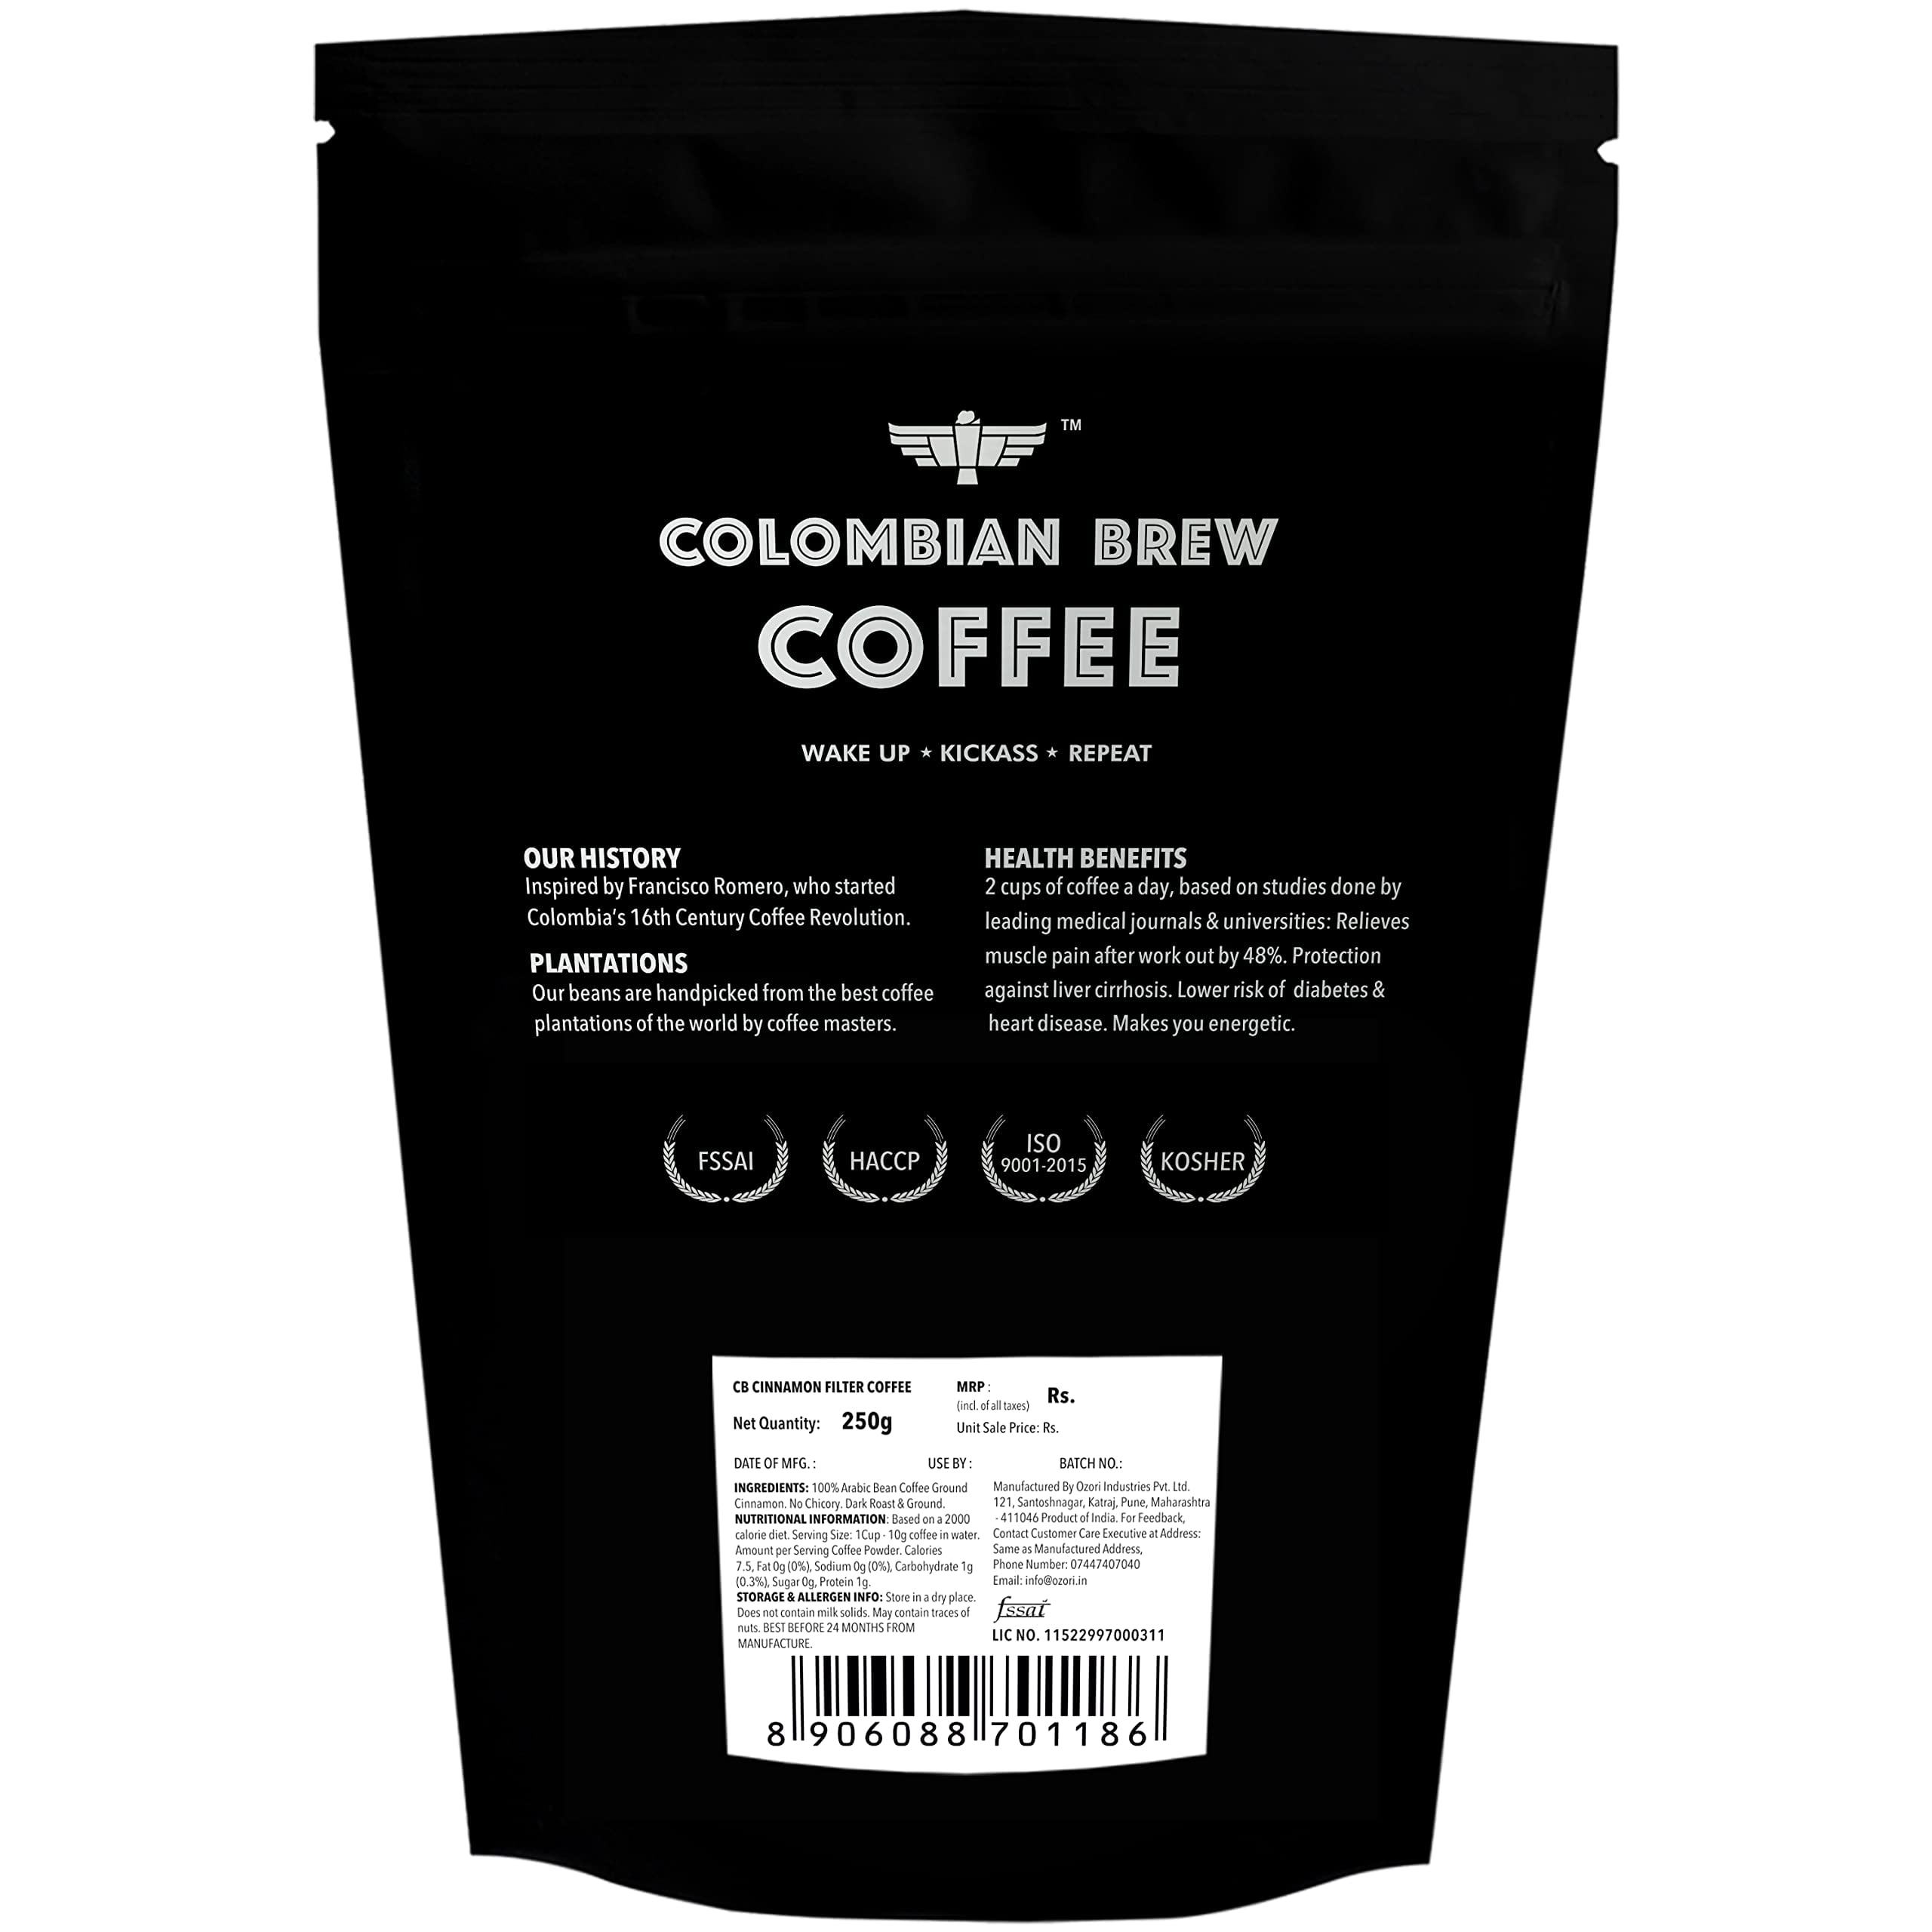 Colombian Brew Arabica Espresso Filter Coffee Powder, Roast